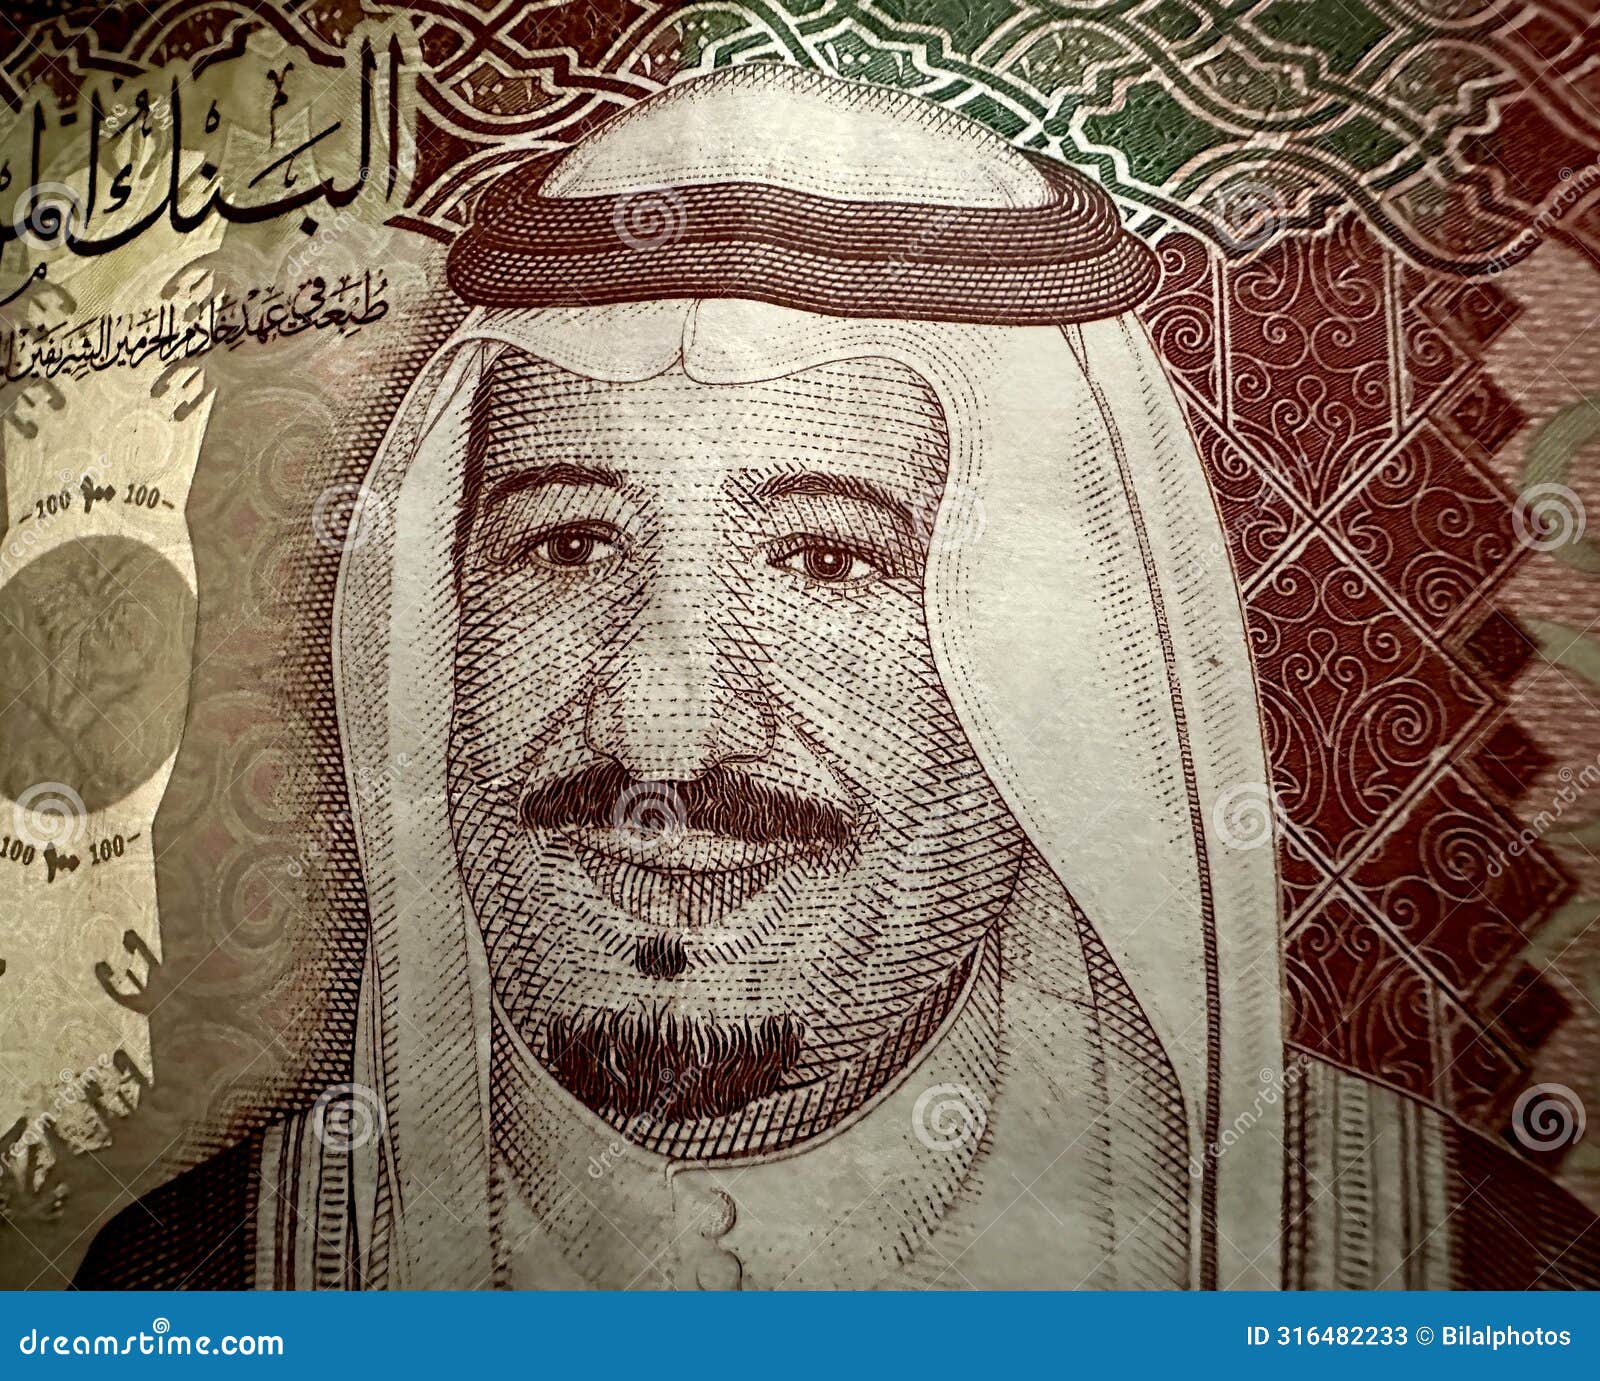 the portrait of king salman bin abdulaziz al saud from saudi arabia 100 riyal banknote